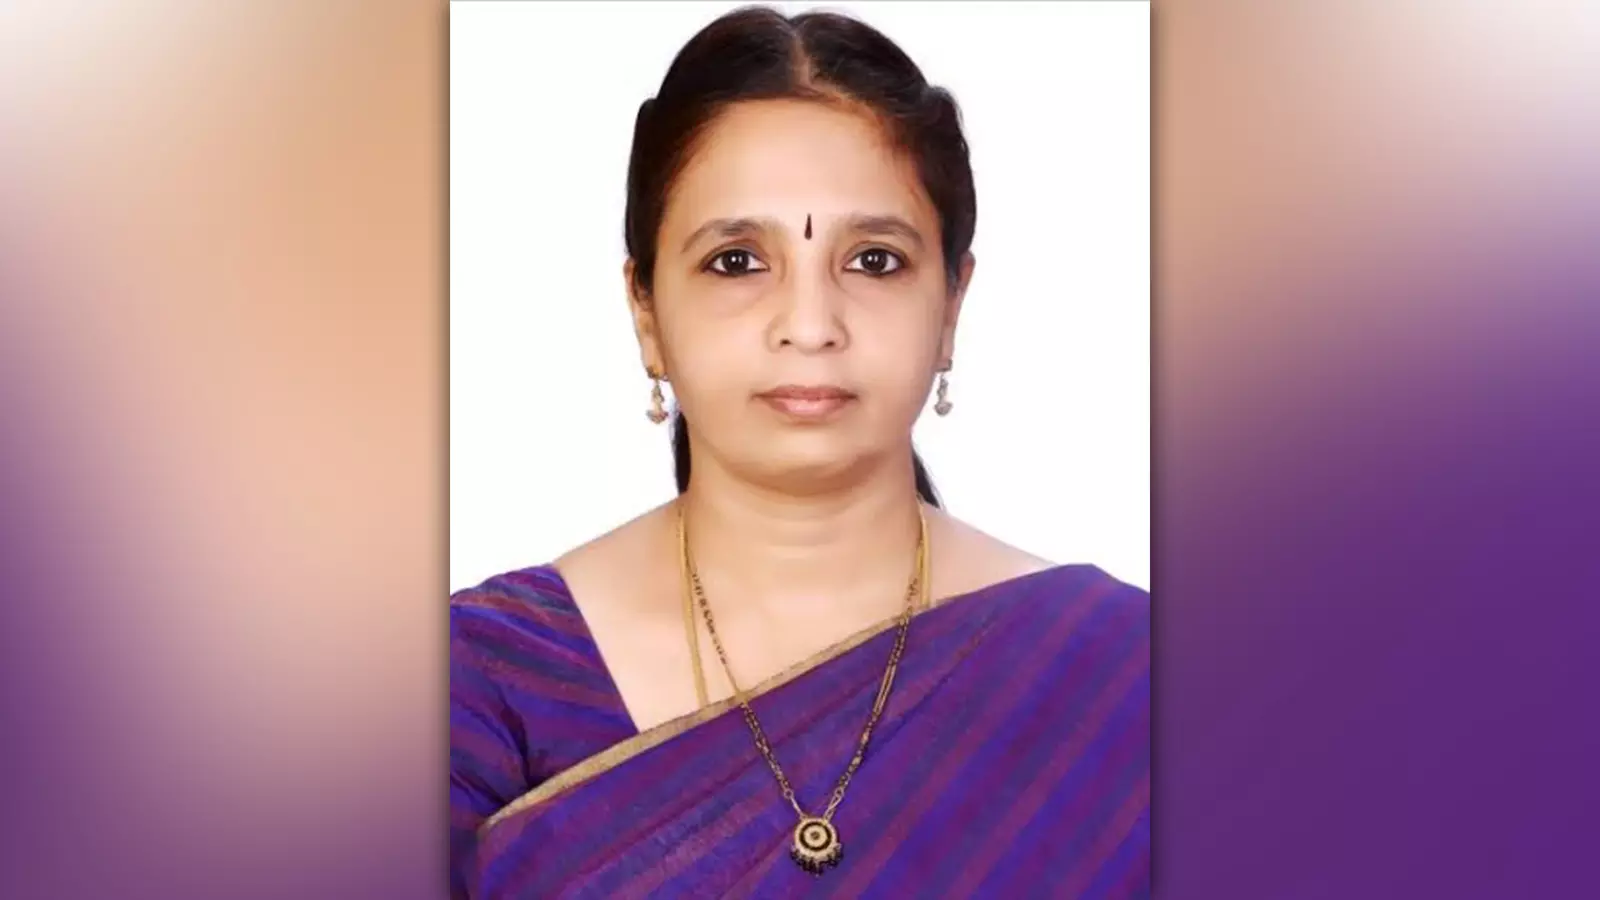 Meet Sheena Rani, the woman scientist behind India’s Agni missile programme